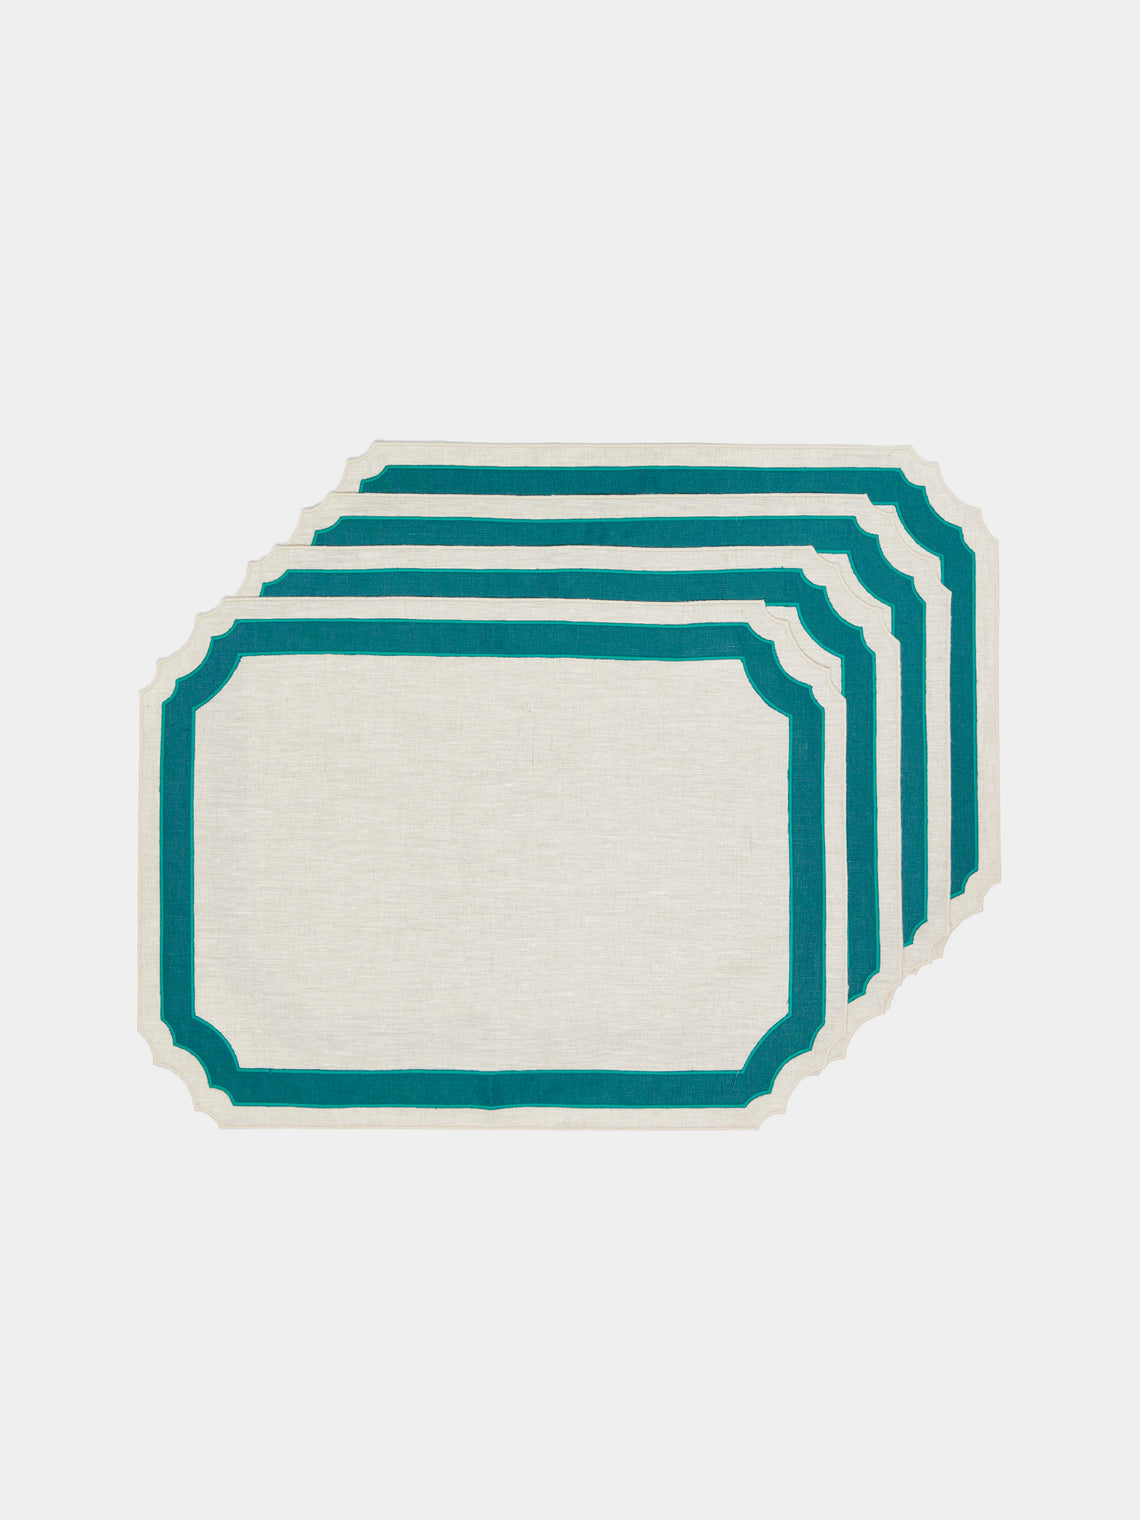 Los Encajeros - Vega Embroidered Linen Placemats (Set of 4) - Beige - ABASK